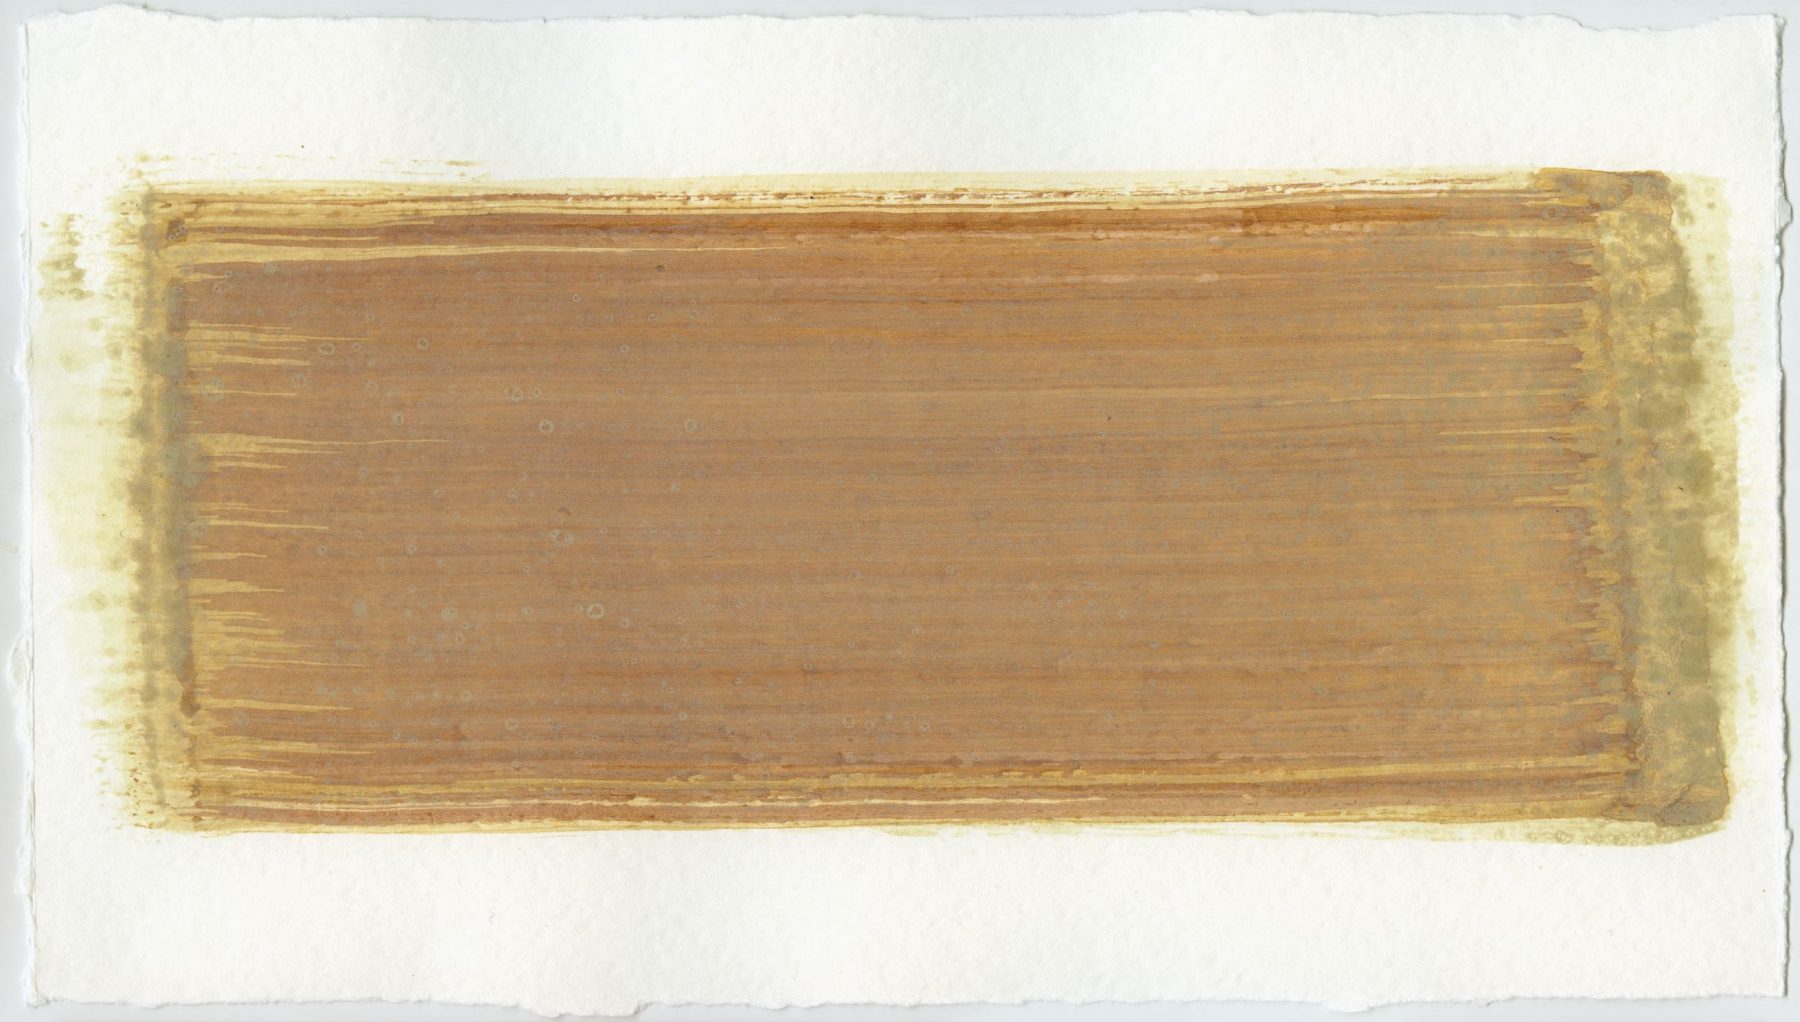 Brush stroke no. 75 - Selfmade pigment: Mortelse goudoker, Slabroek grijs